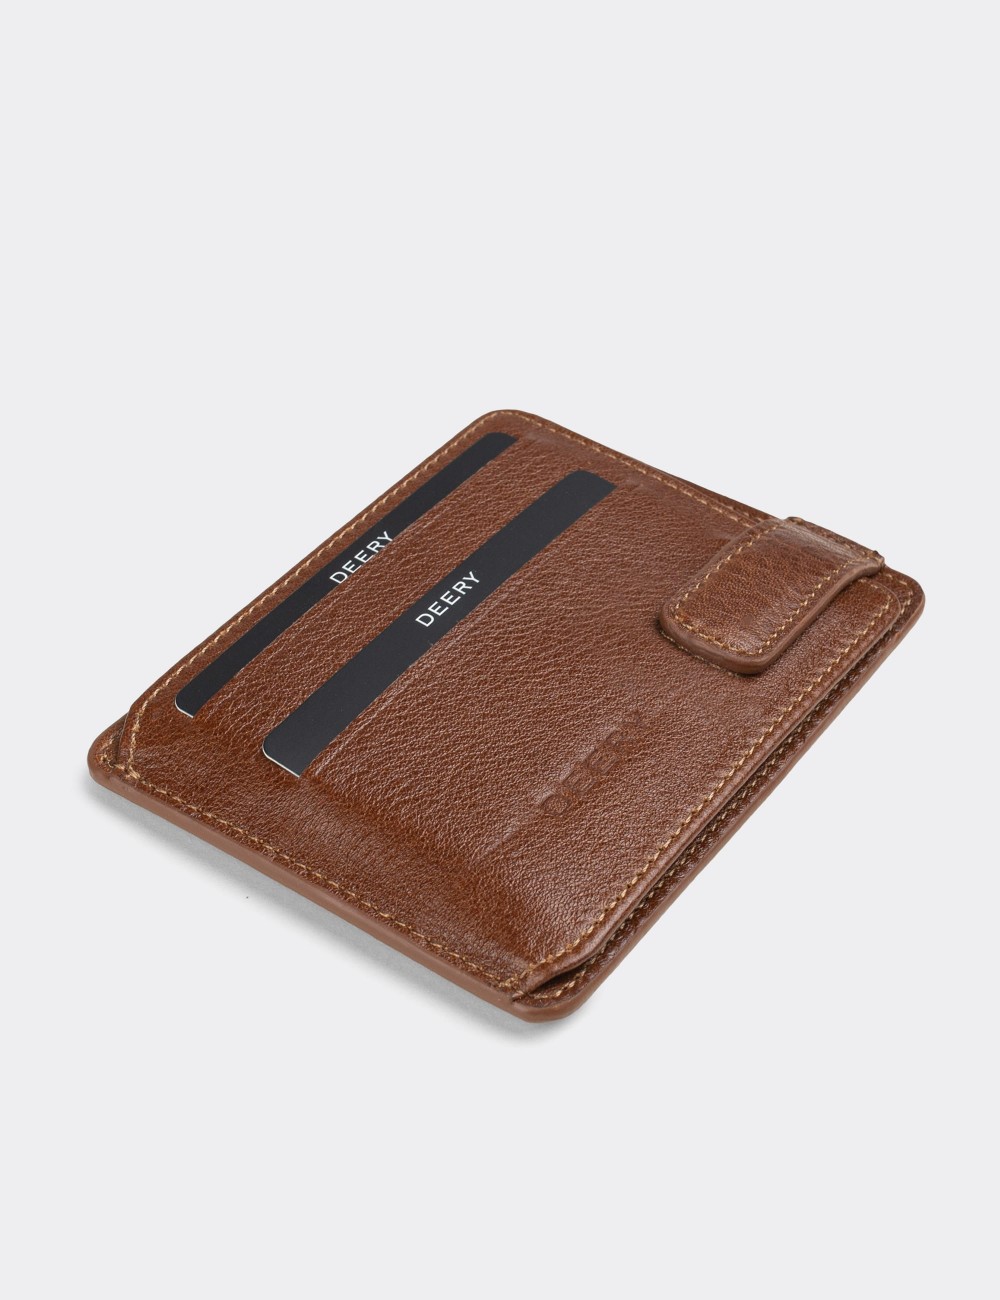  Leather Tan Men's Wallet - 00521MTBAZ01